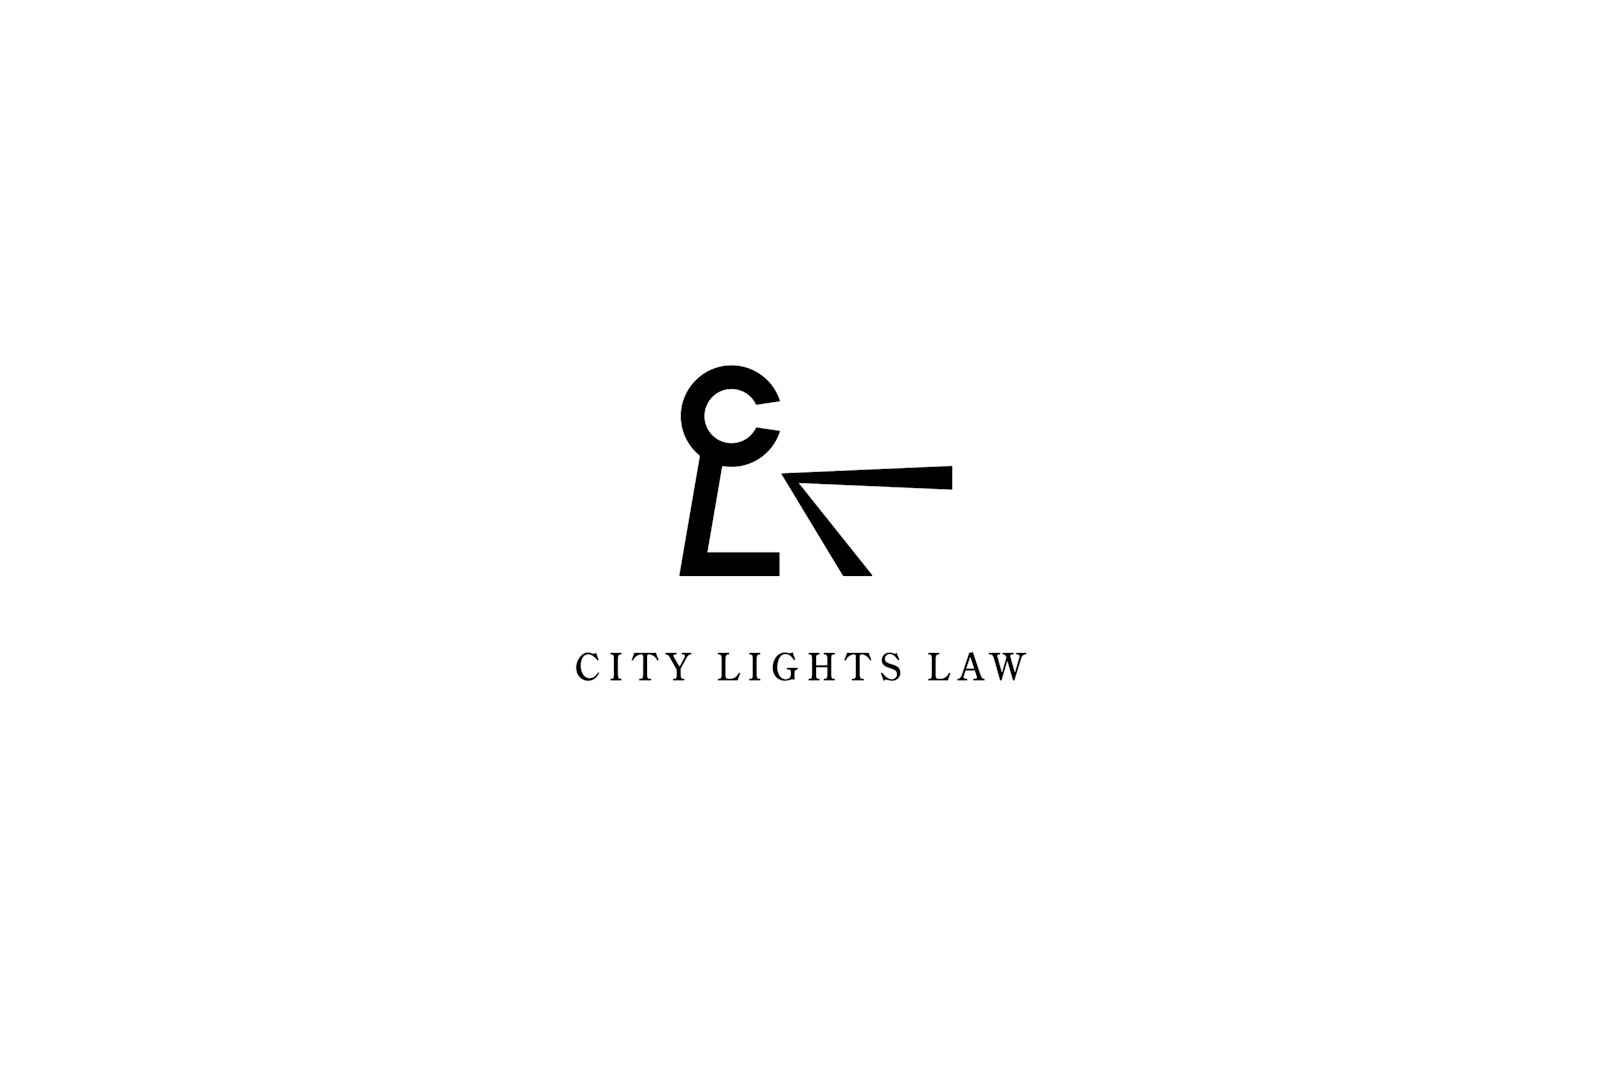 City Lights Law